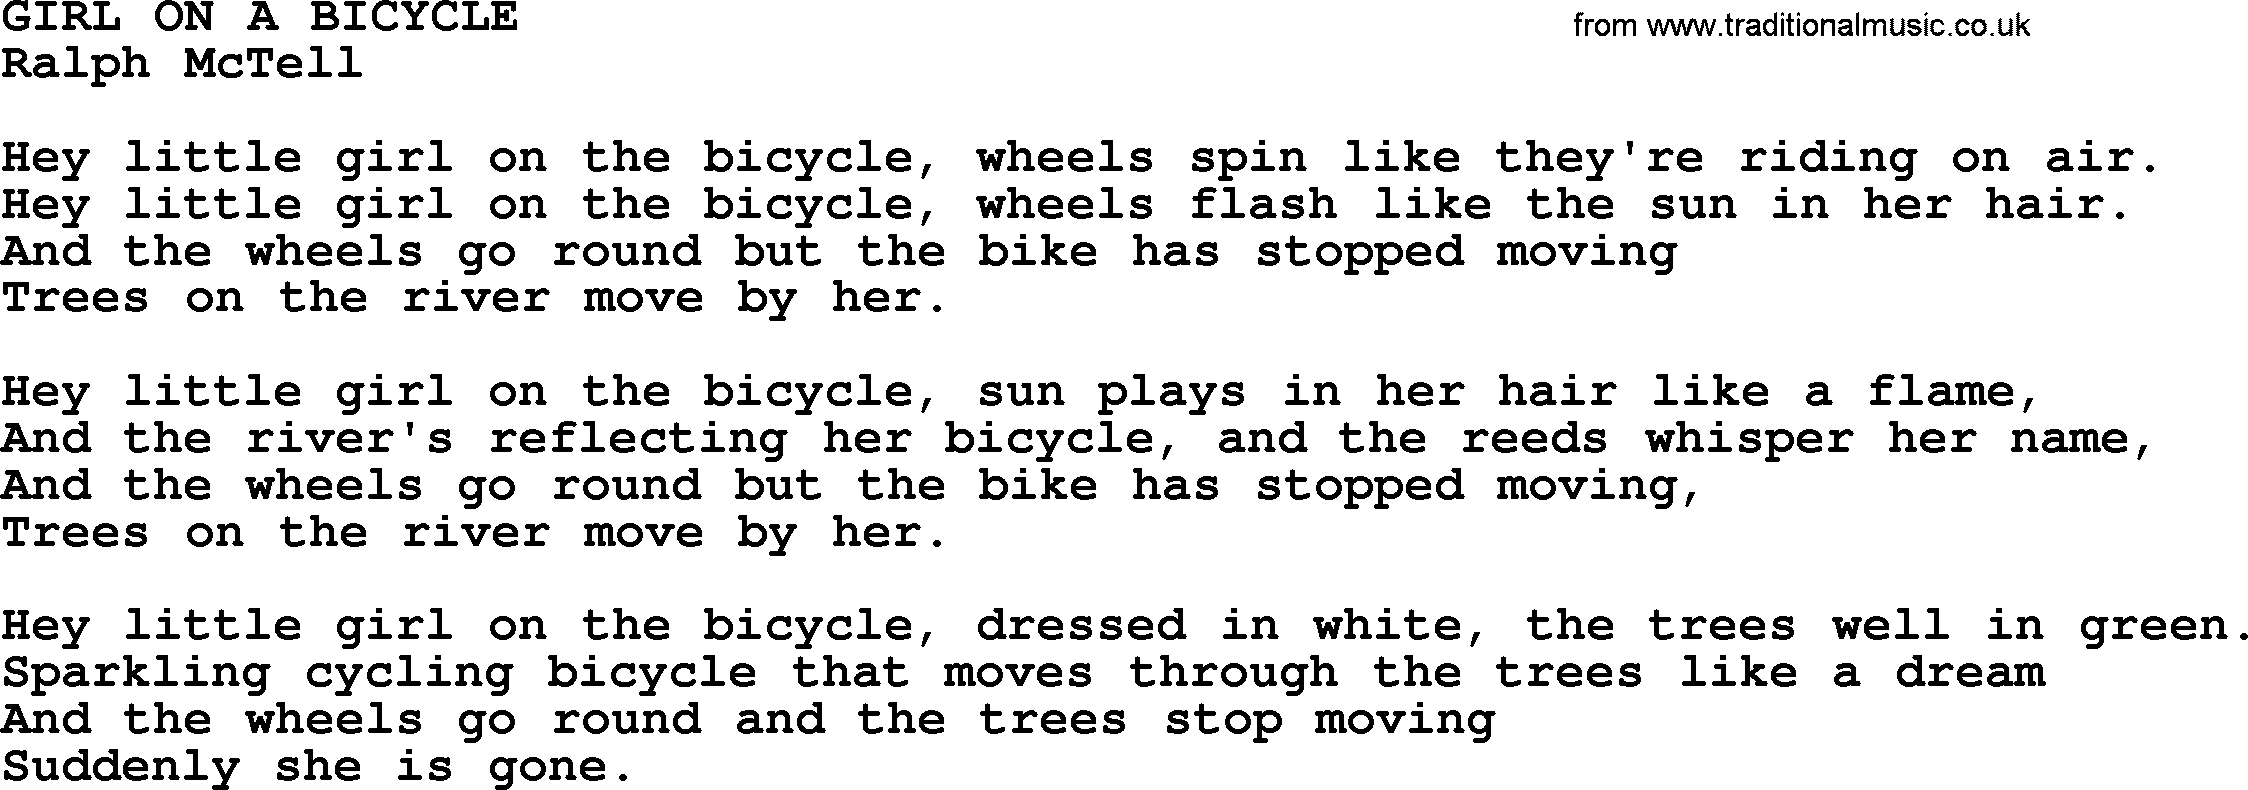 Ralph McTell Song: Girl On A Bicycle, lyrics